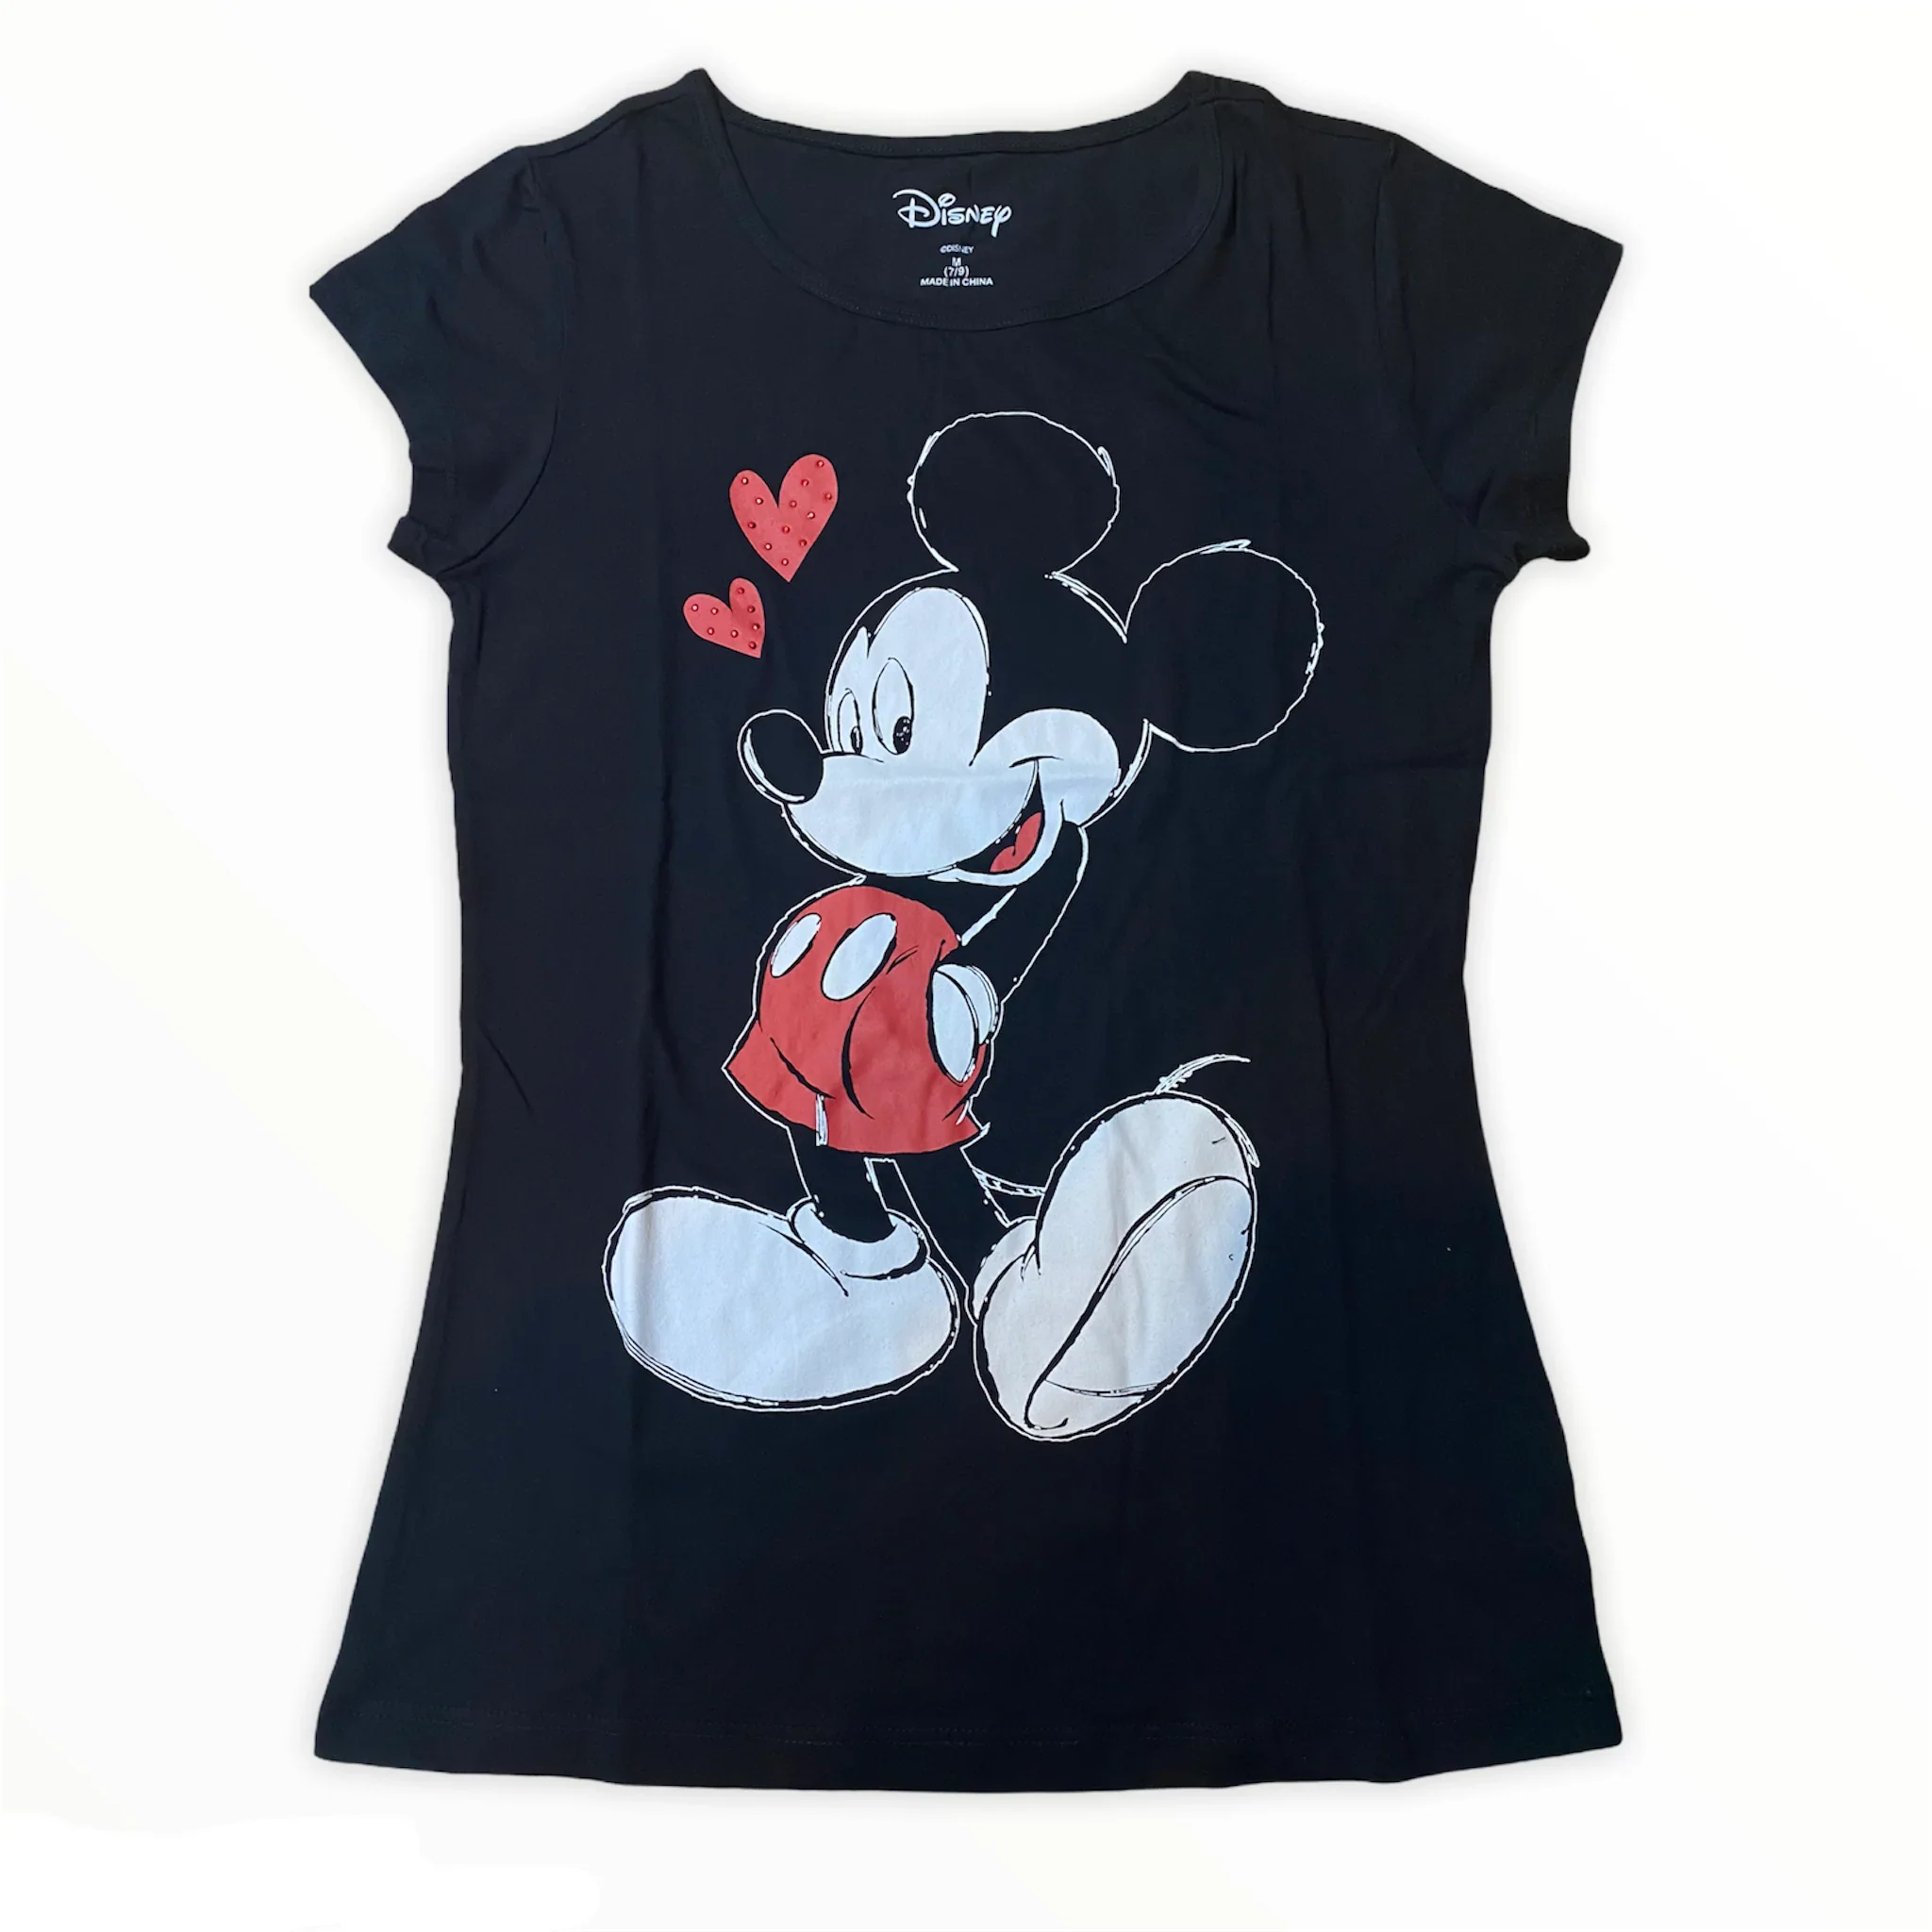 Mickey Mouse Hearts Loungewear Tee